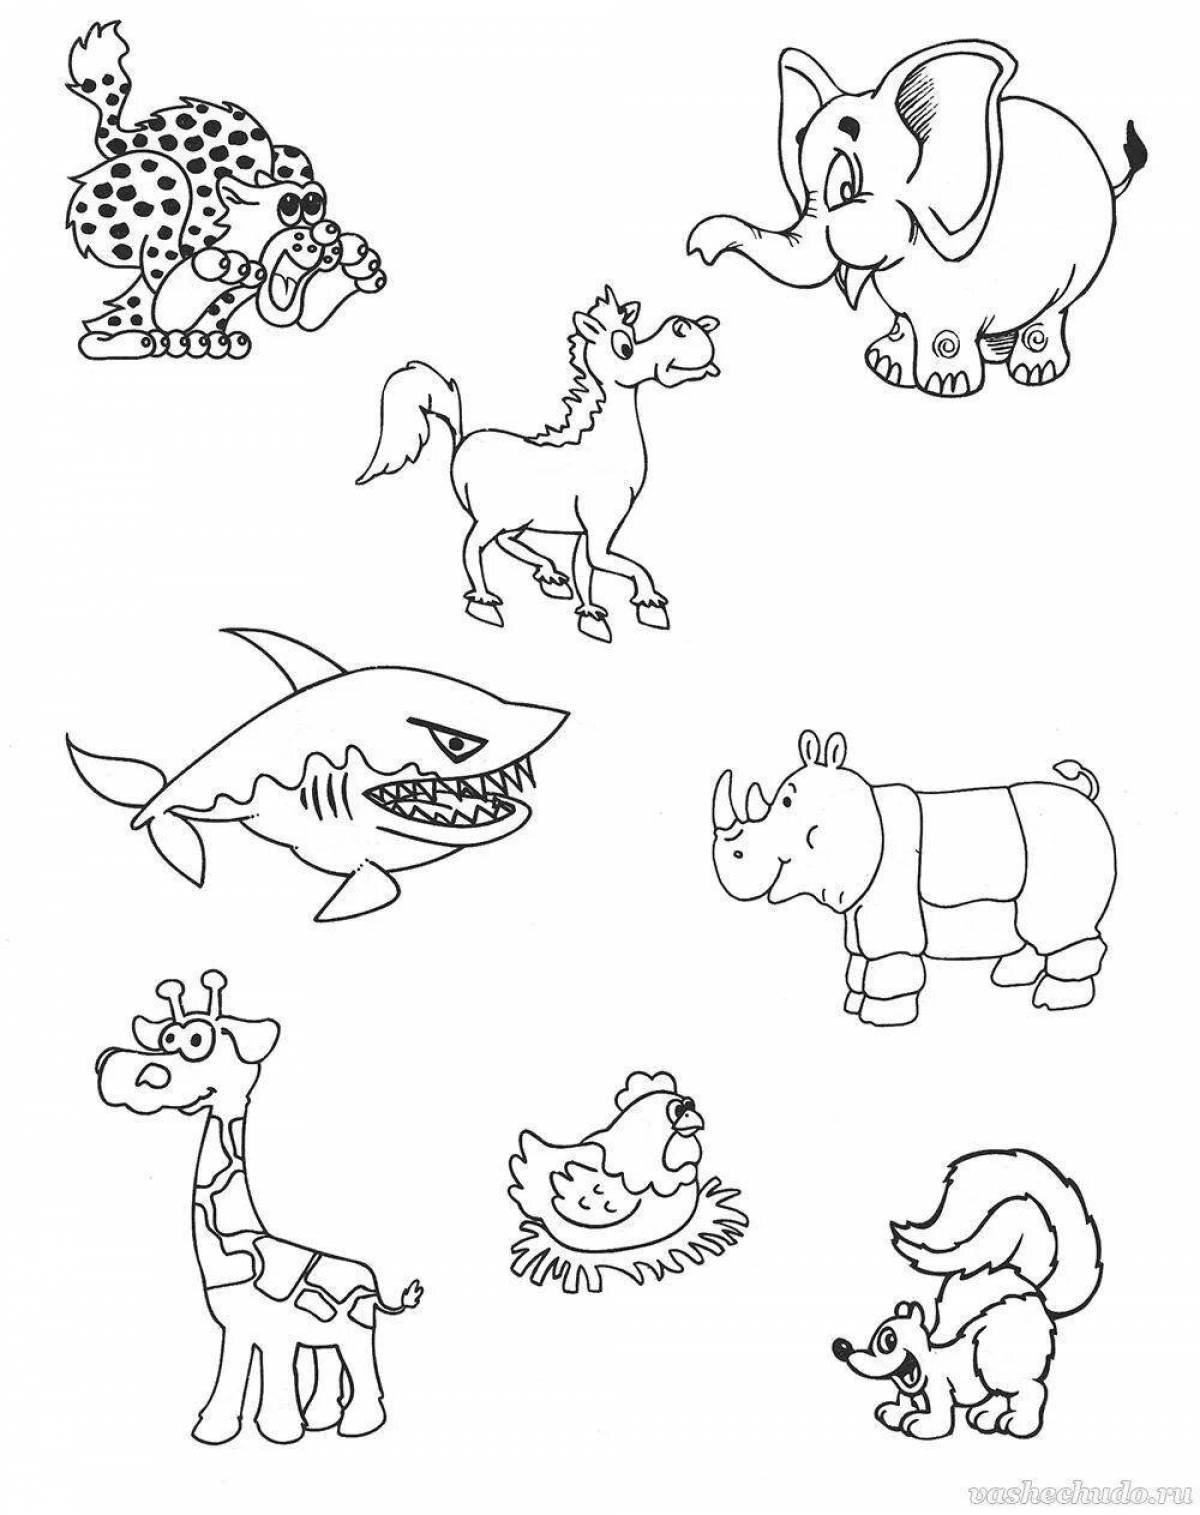 Wonderful wild animal coloring page